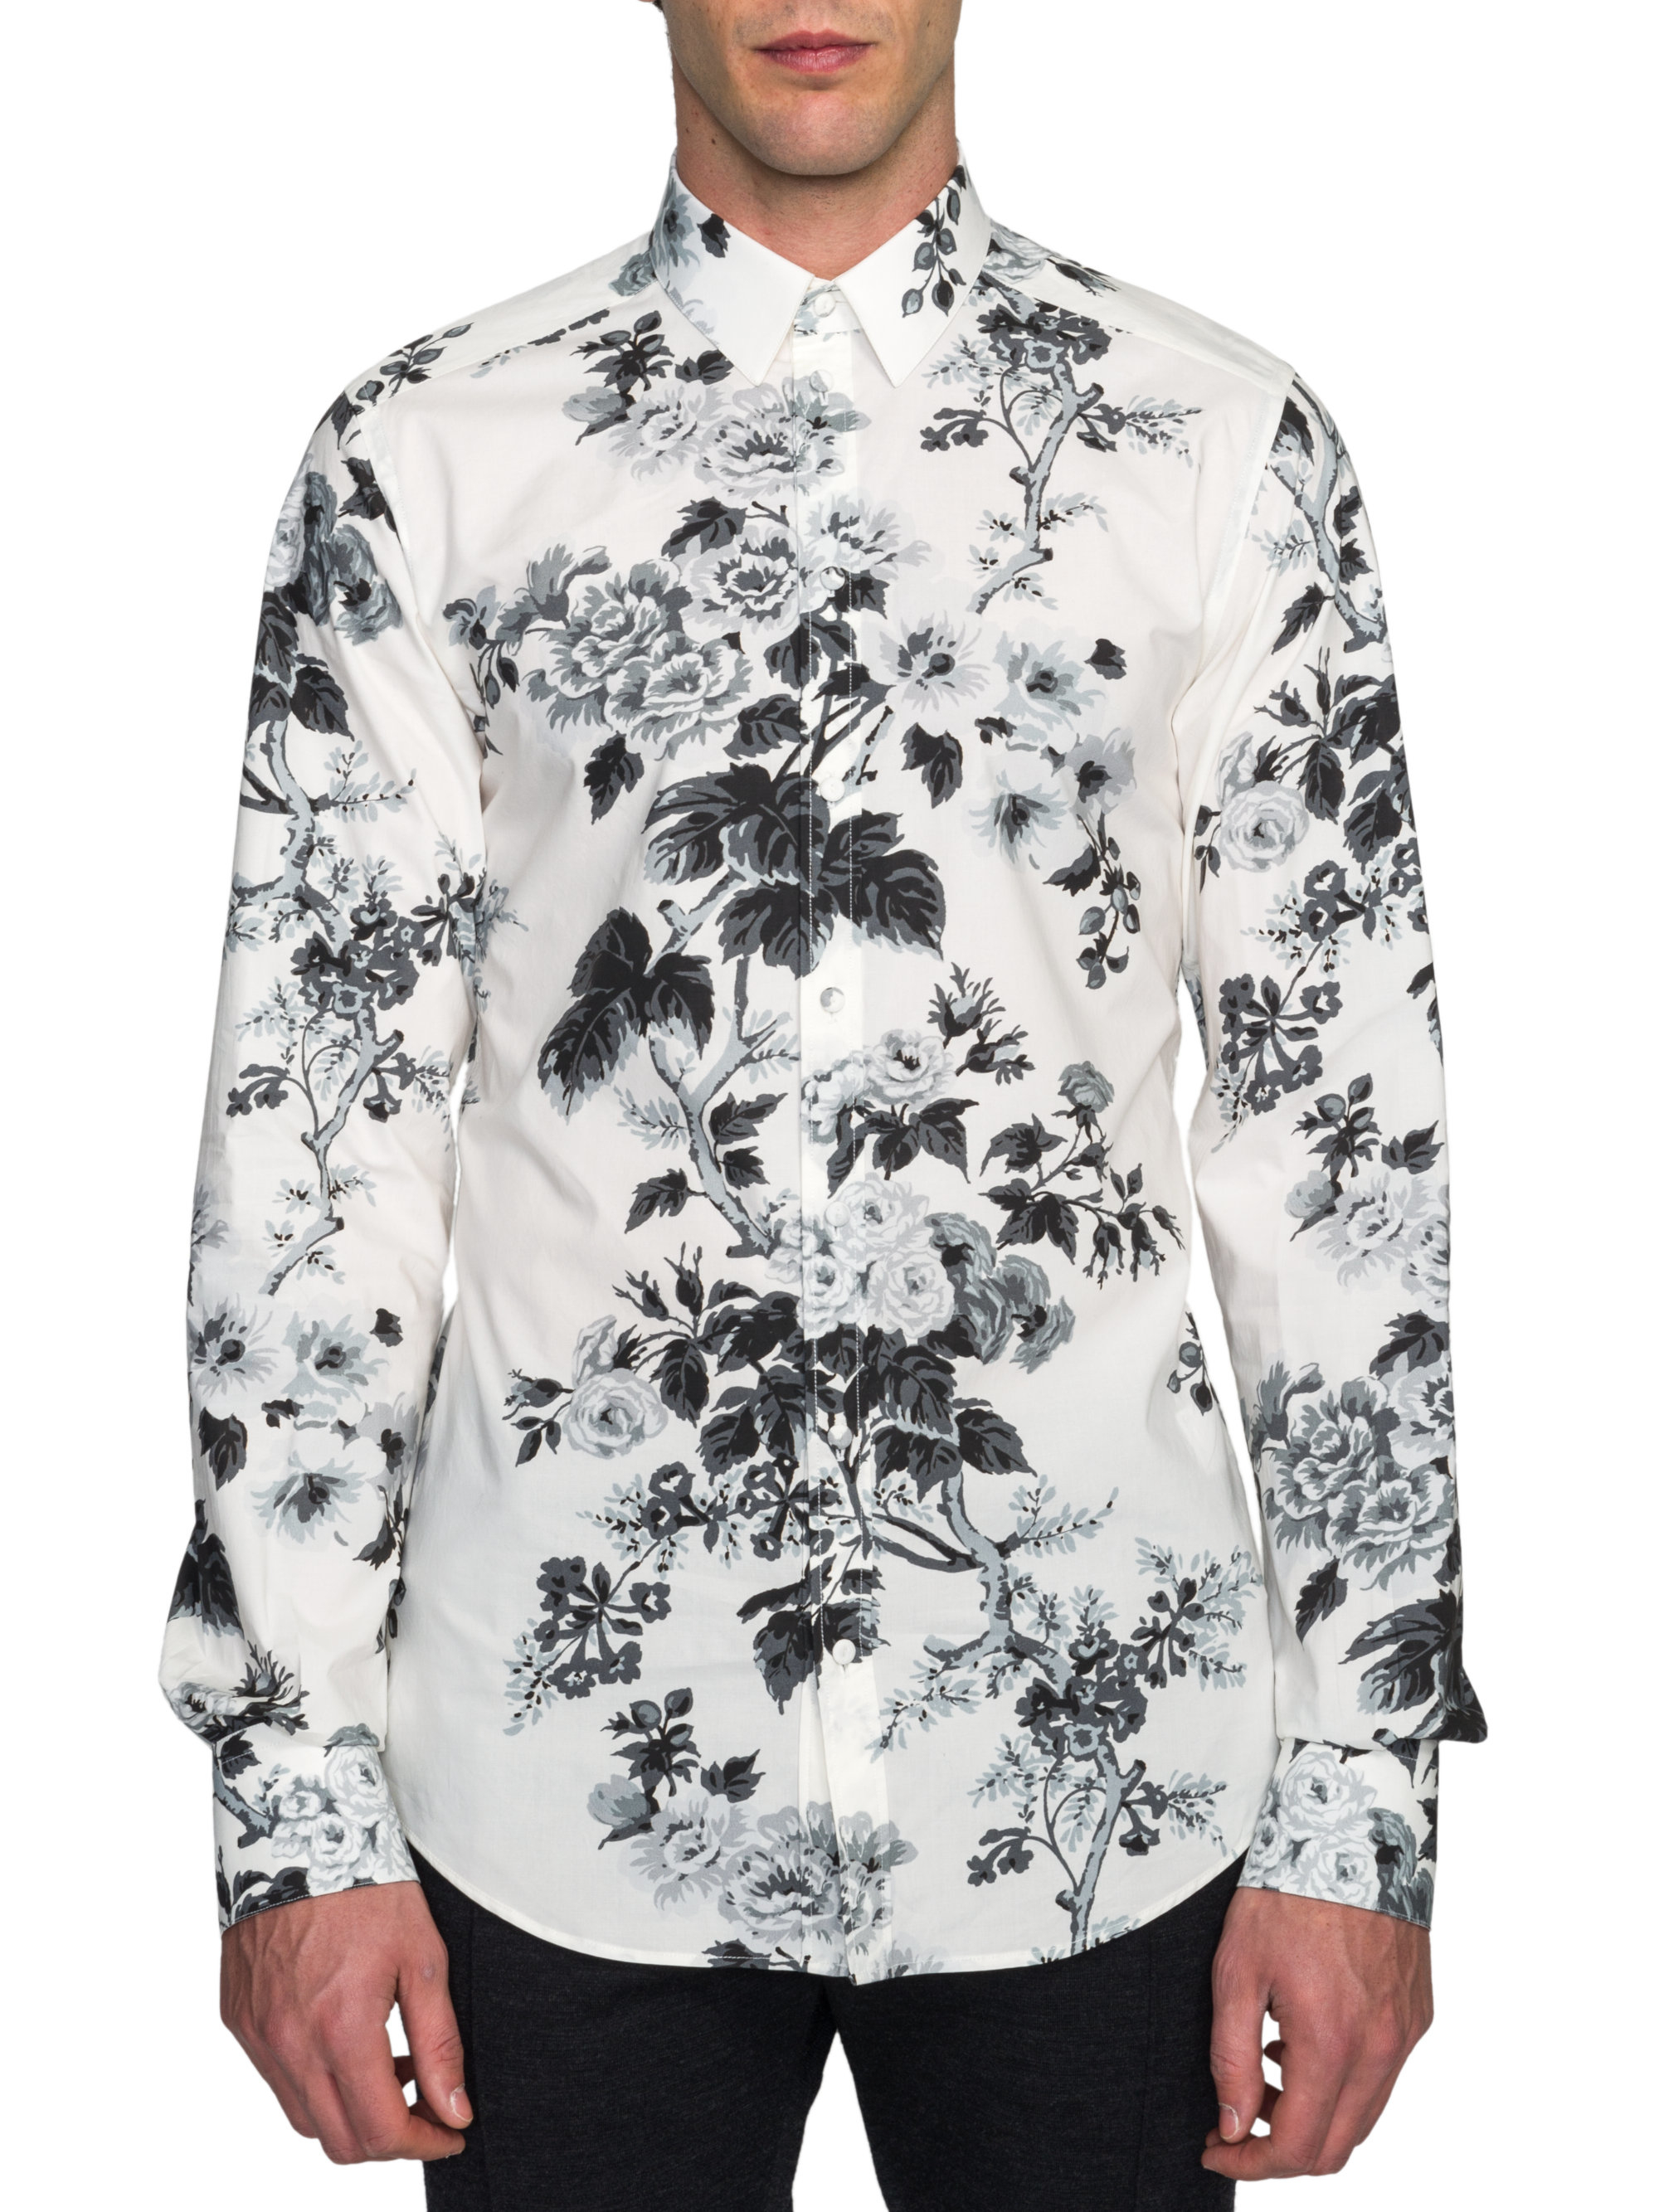 Lyst - Dolce & gabbana Floral Print Shirt in Black for Men